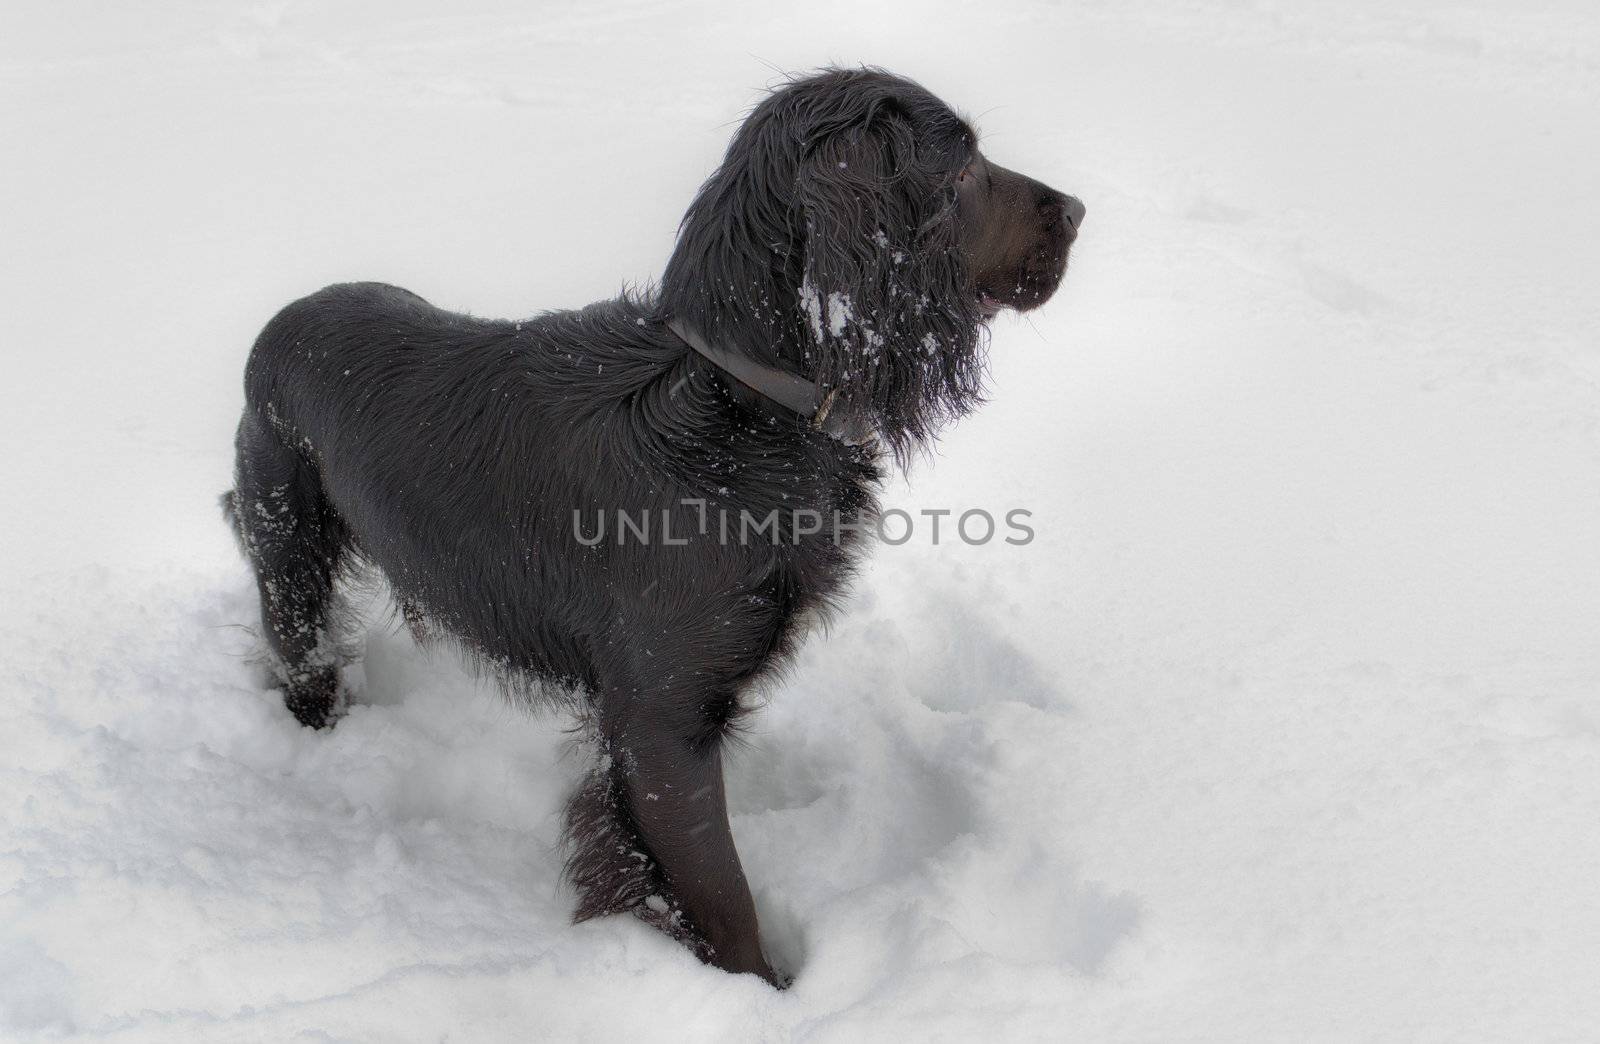 Black dog in snow by Jez22